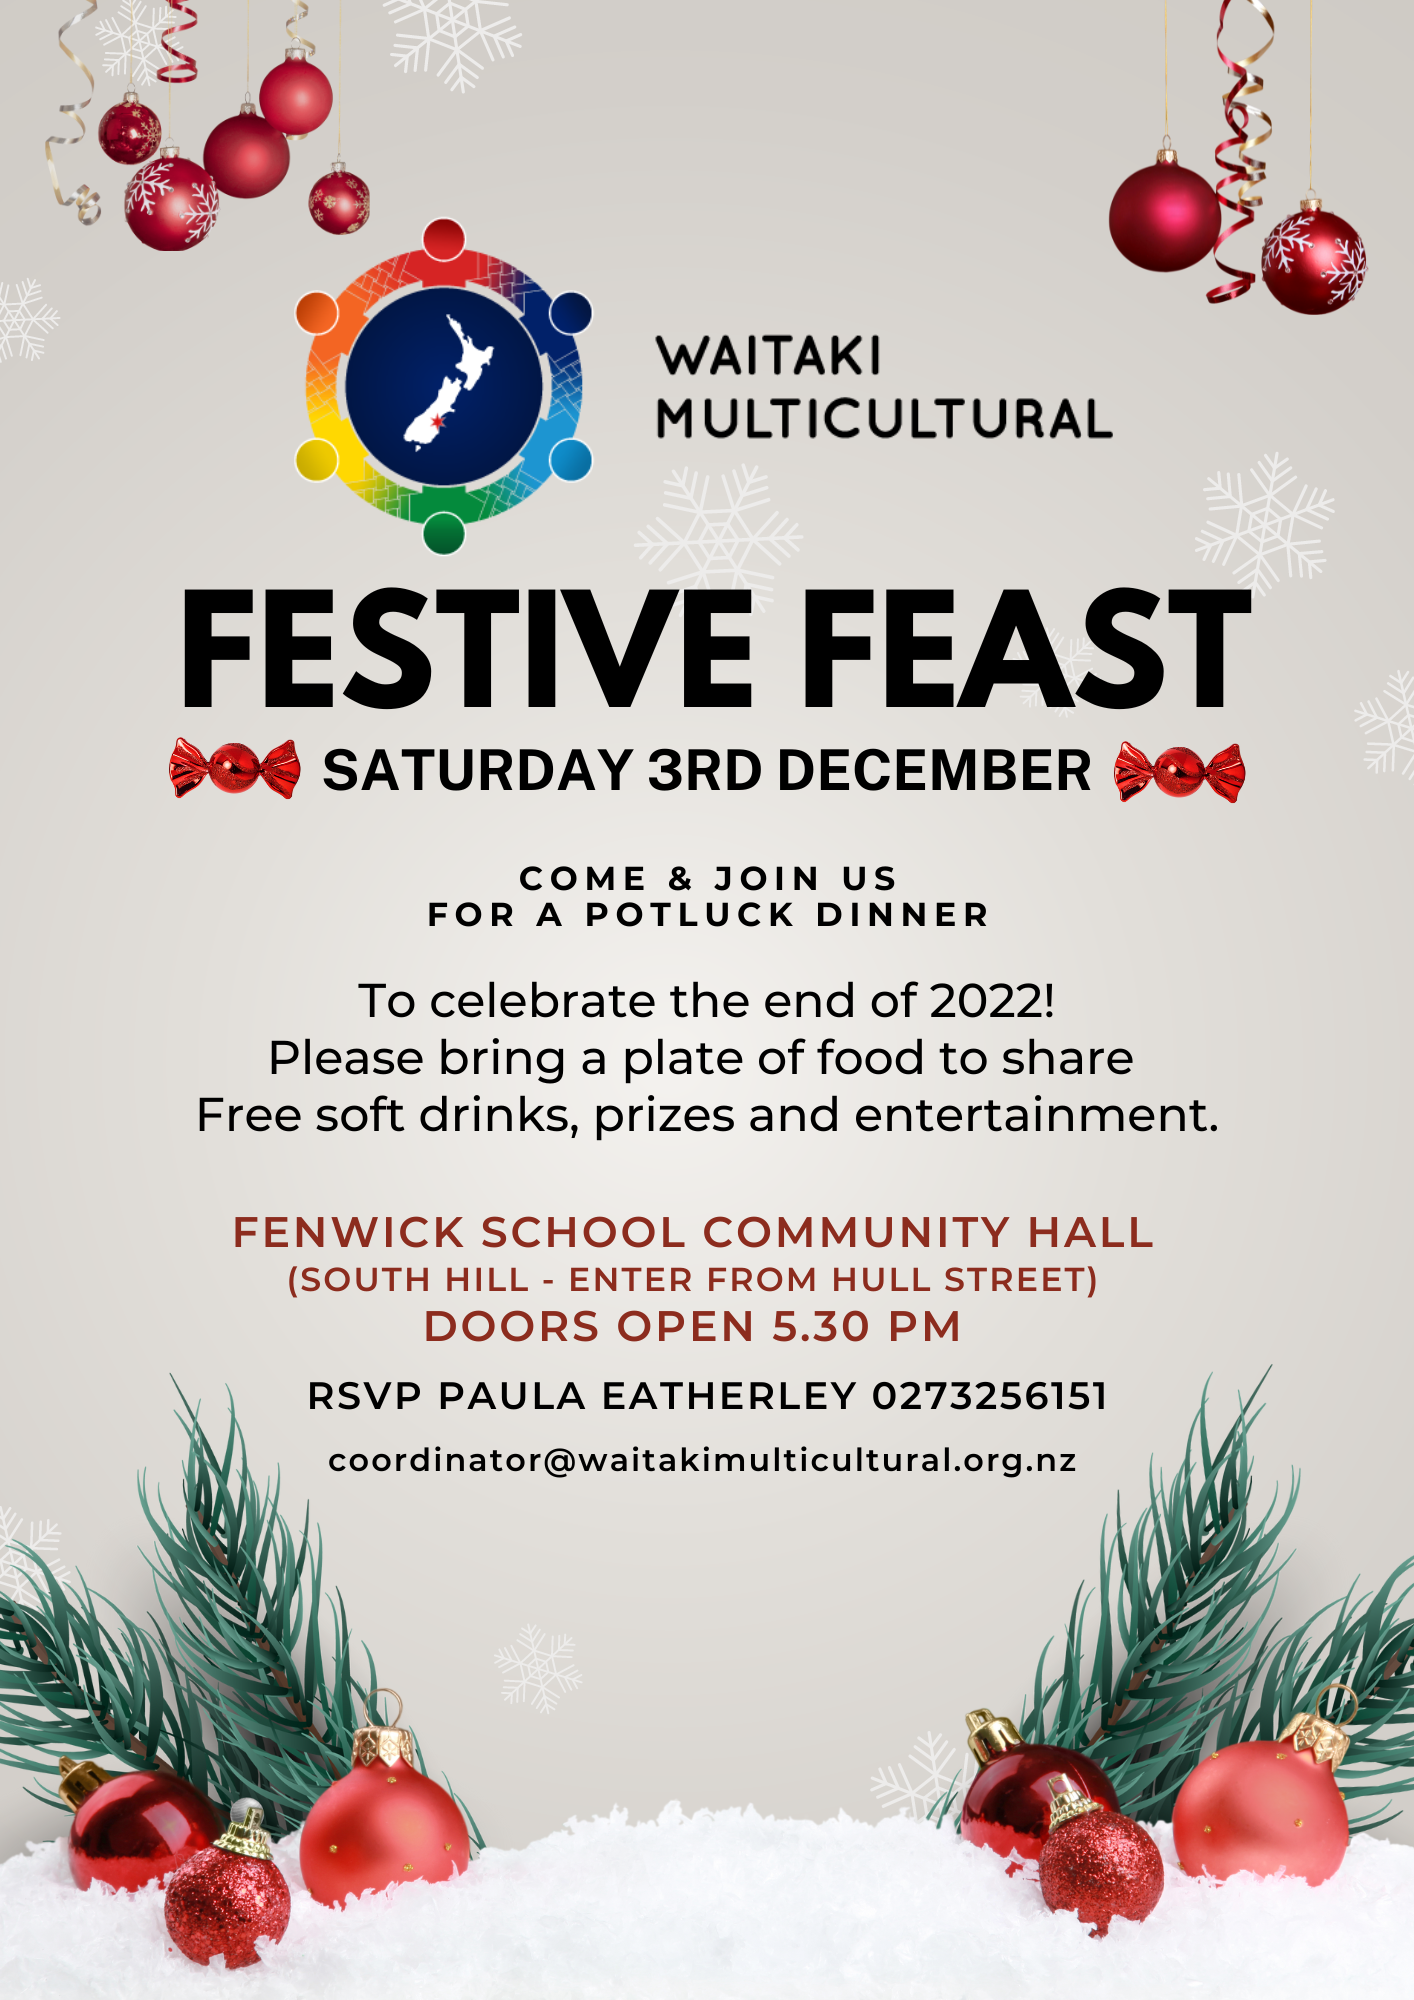 Waitaki Multicultural's Festive Feast 2022